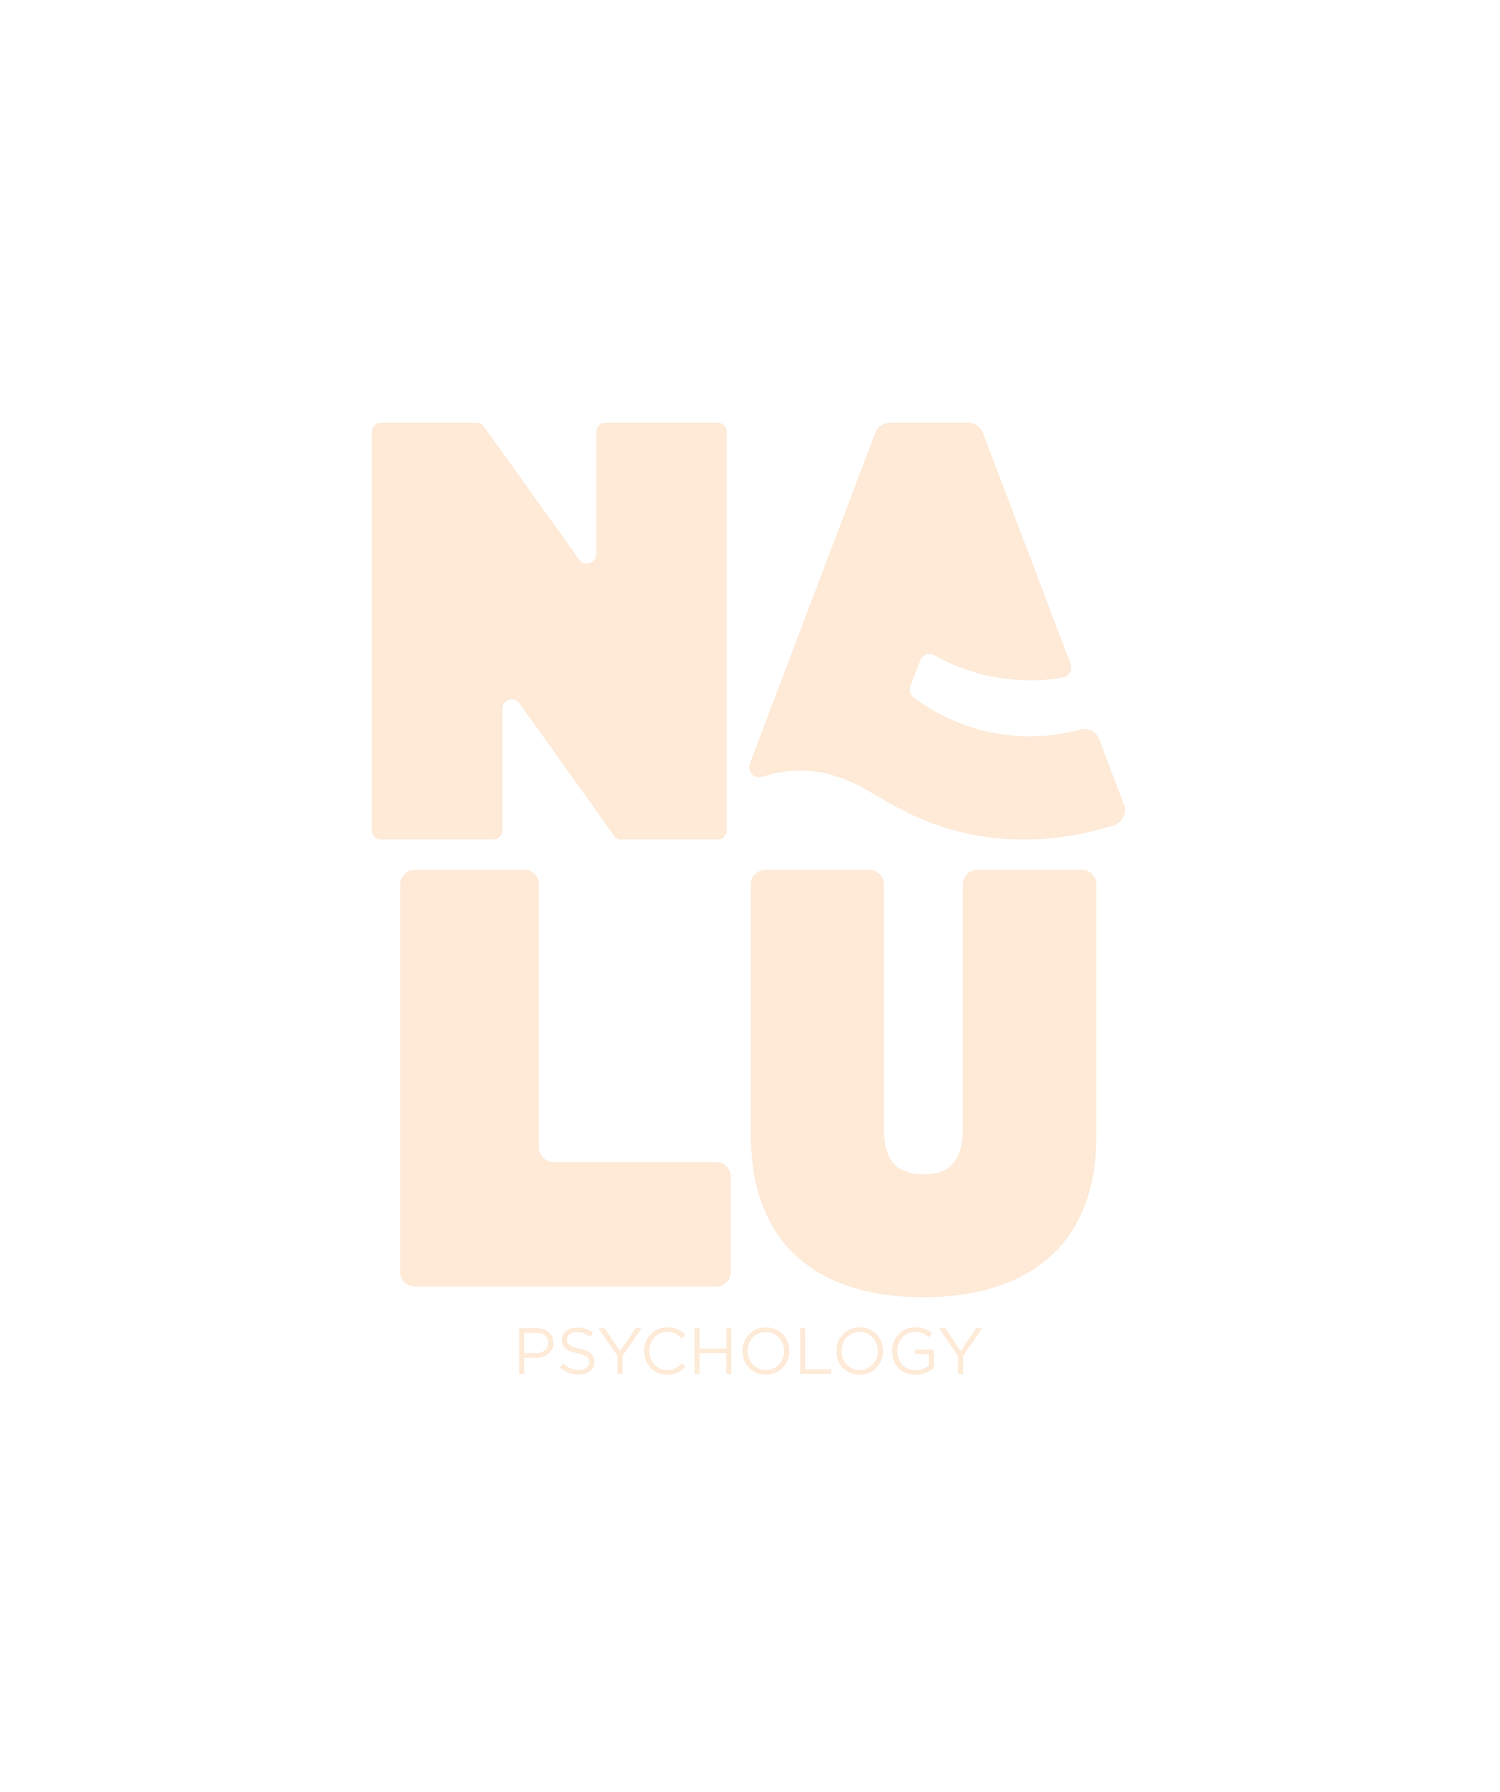 Nalu Psychology